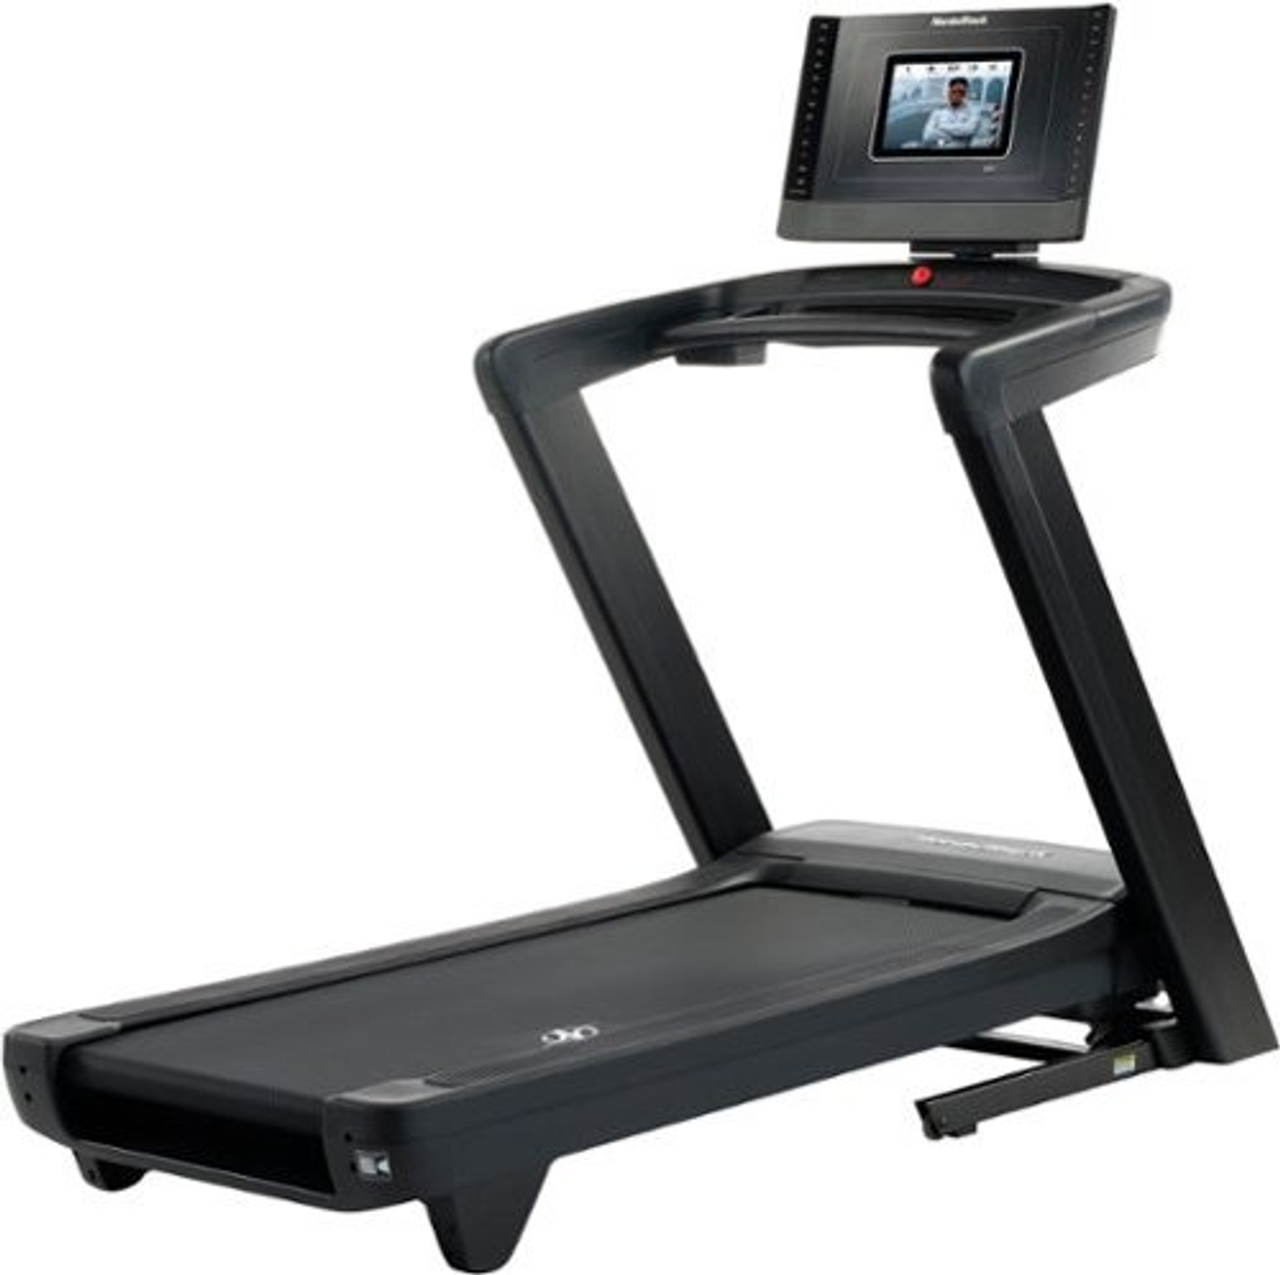 Nordictrack Commercial 1250 Treadmill - Black